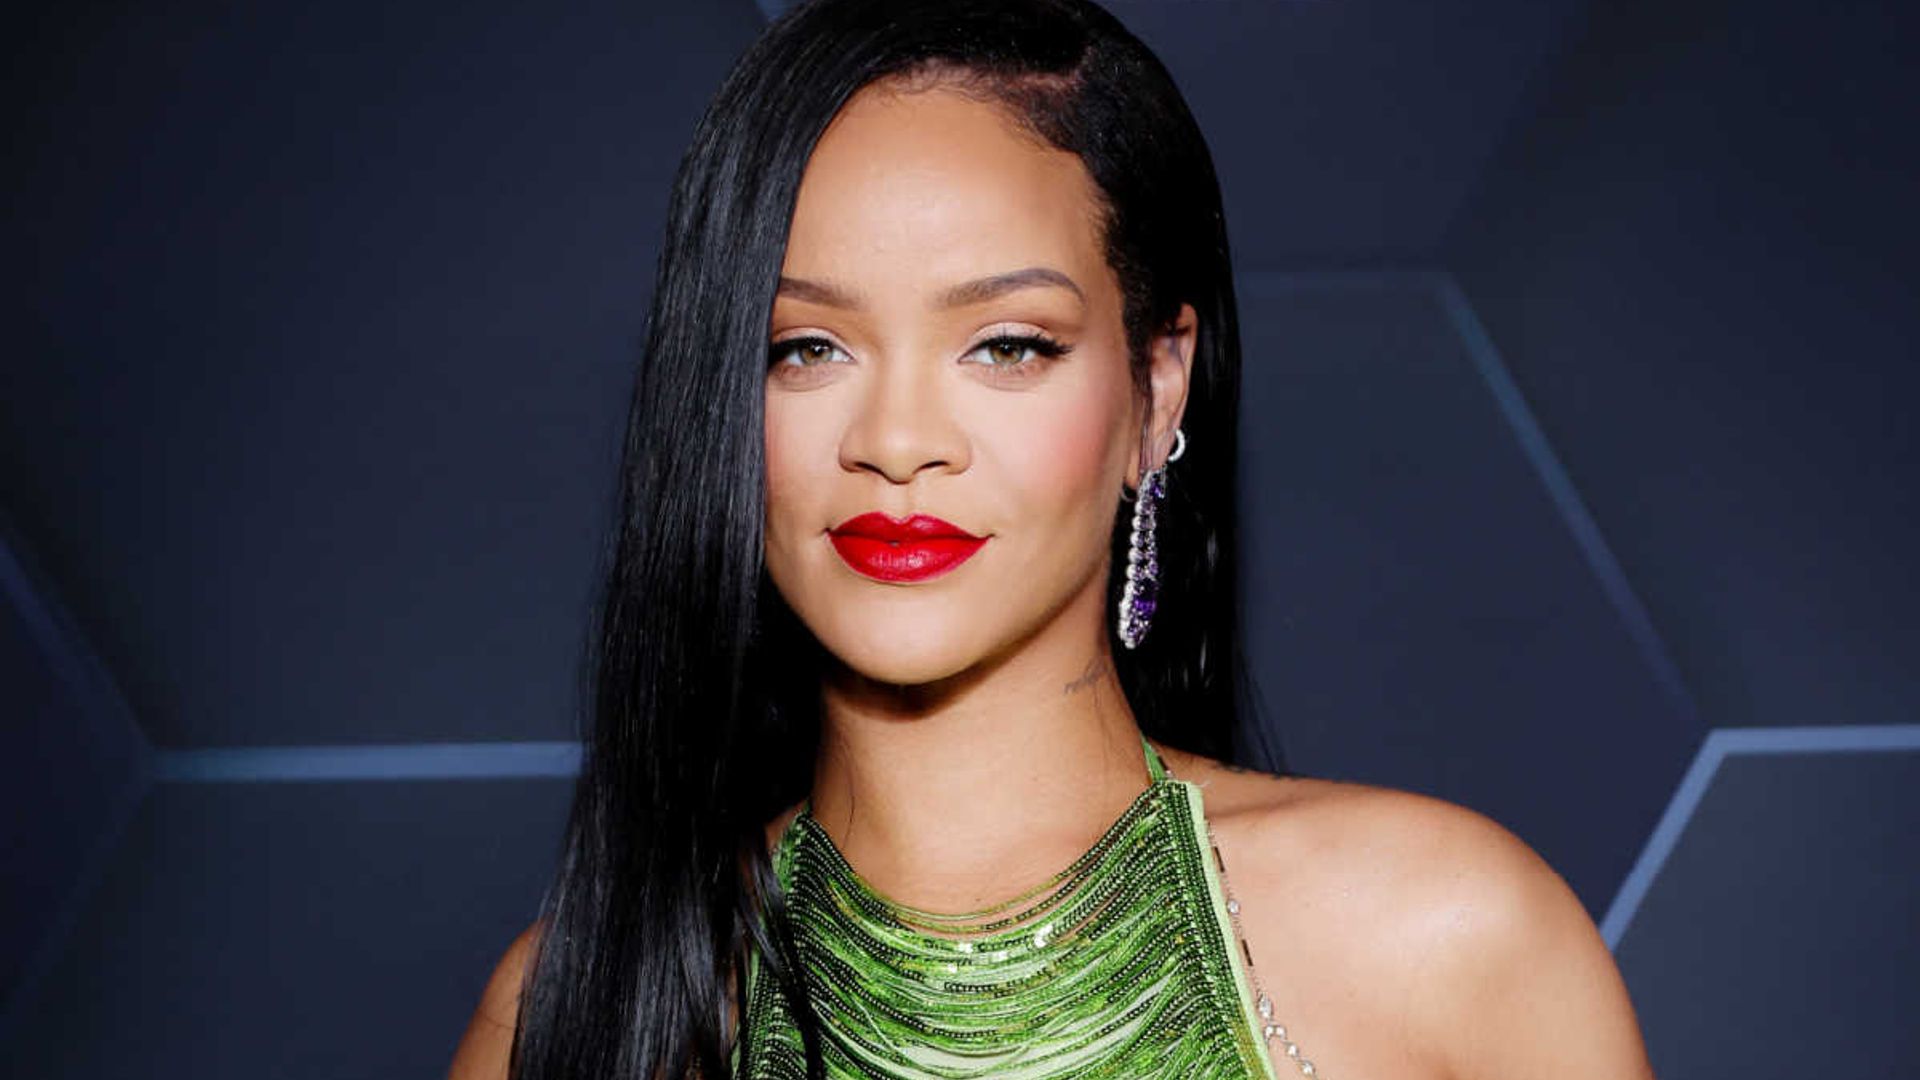 Riana Xxx - Rihanna: Latest News, Pictures & Videos - HELLO!